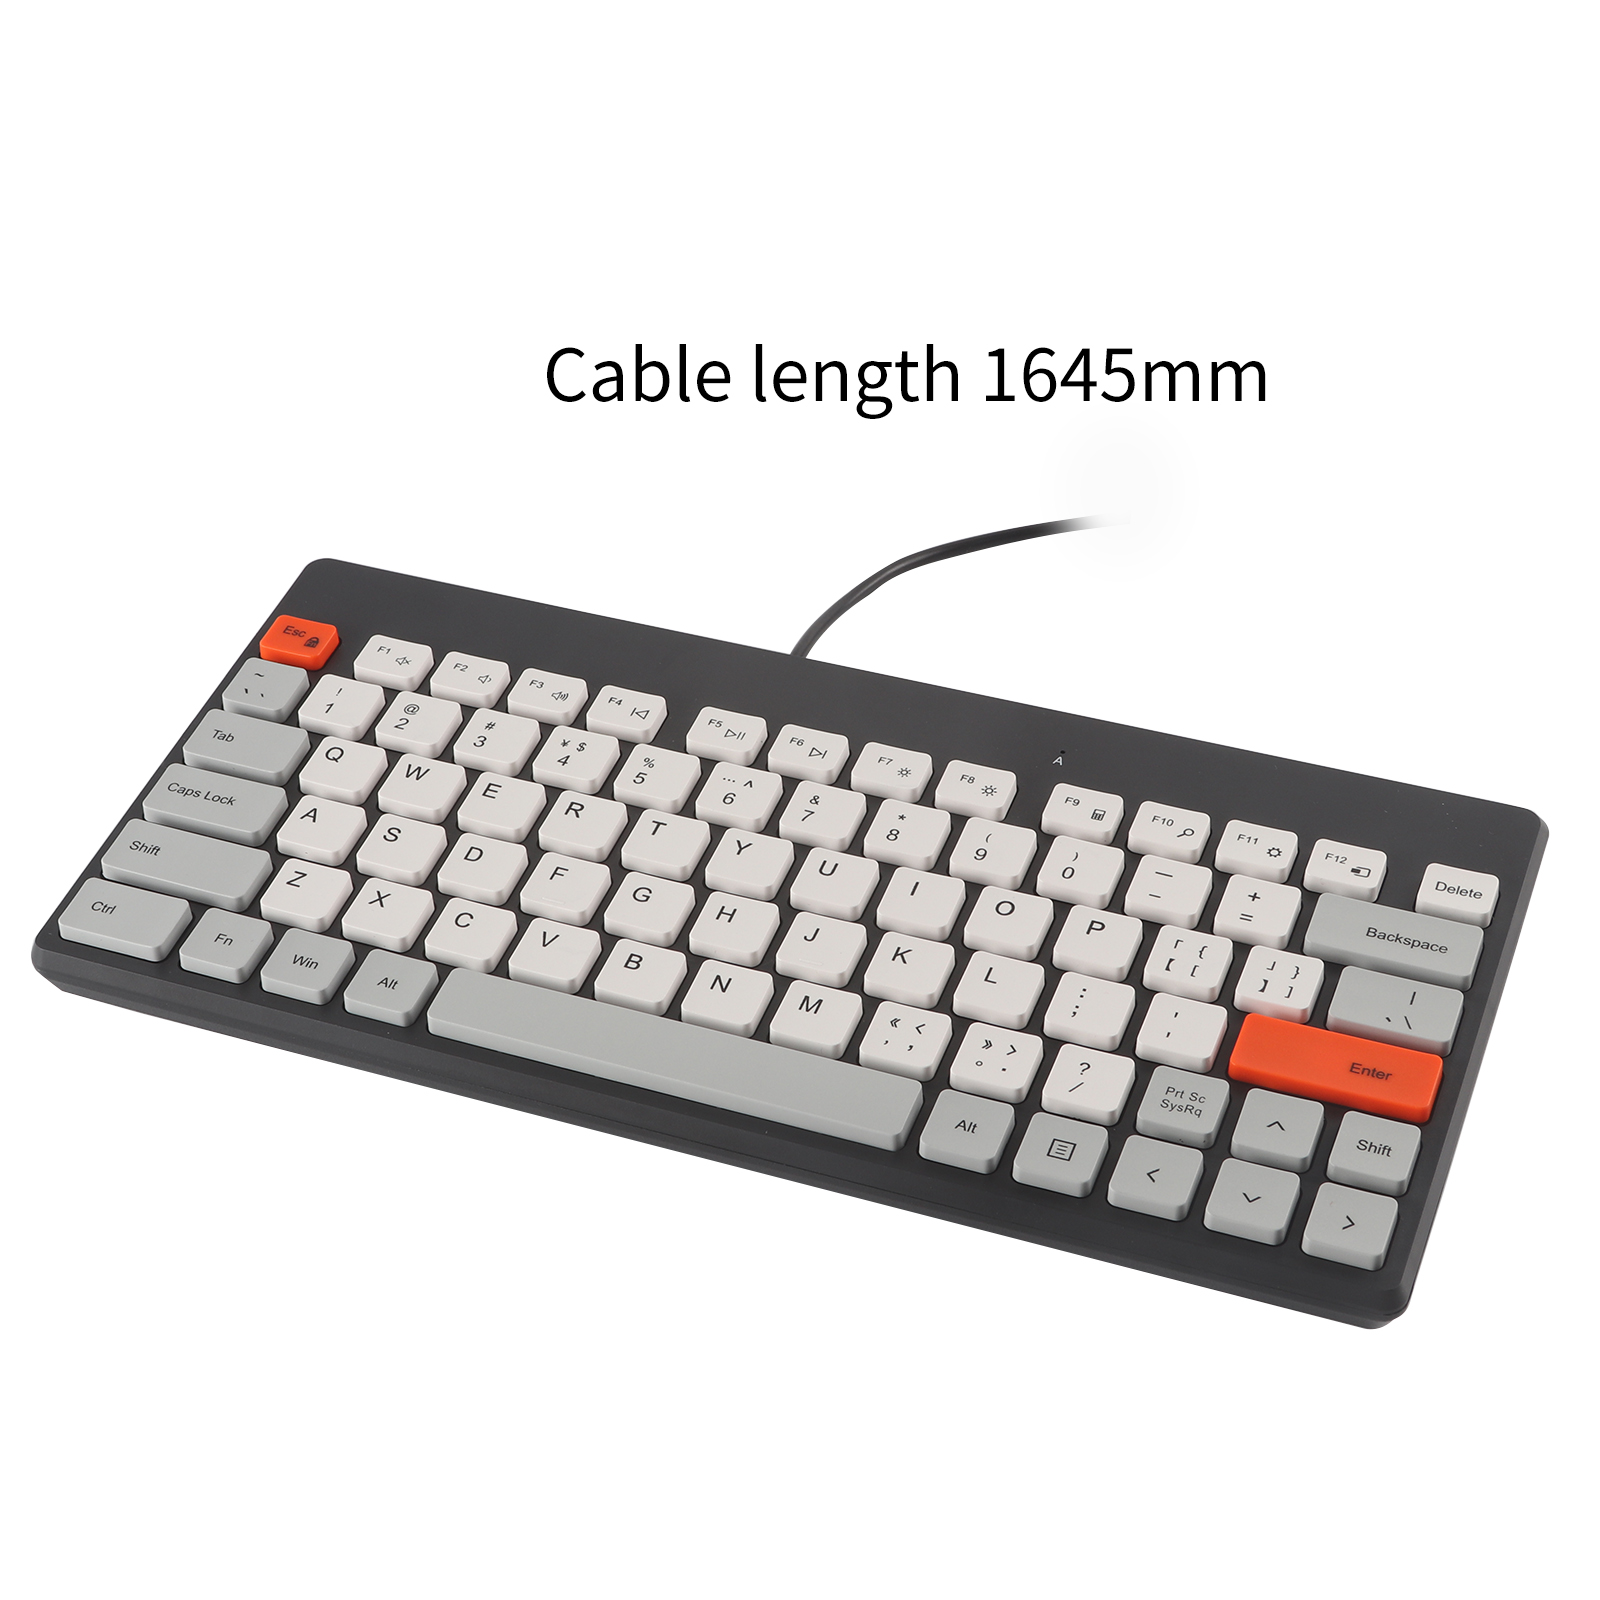 Slim-Silent-Wired-Keyboard-Usb-Cable-Ergonomic-Thin-Keypad-Cute-Mini-Keyboards-For-Mac-Laptop-PC (2)